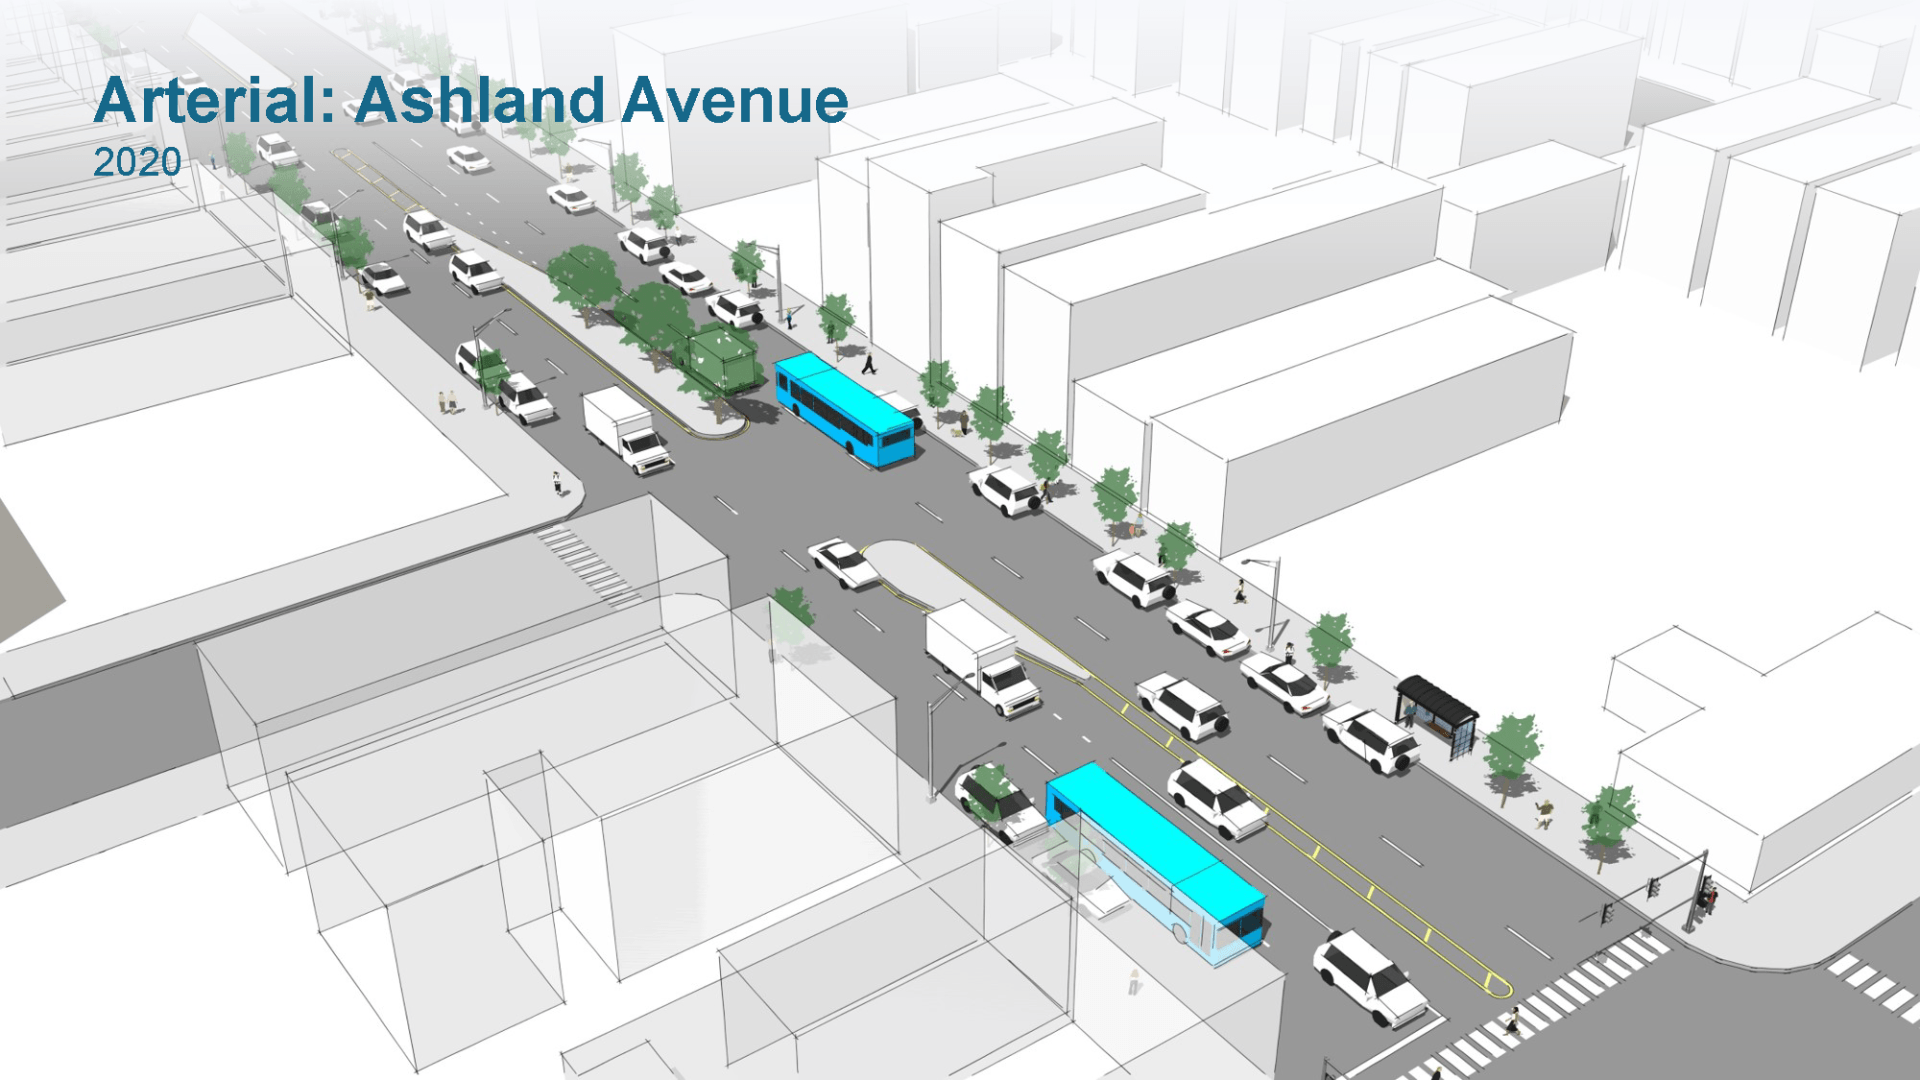 Illustration of Ashland Avenue in 2020